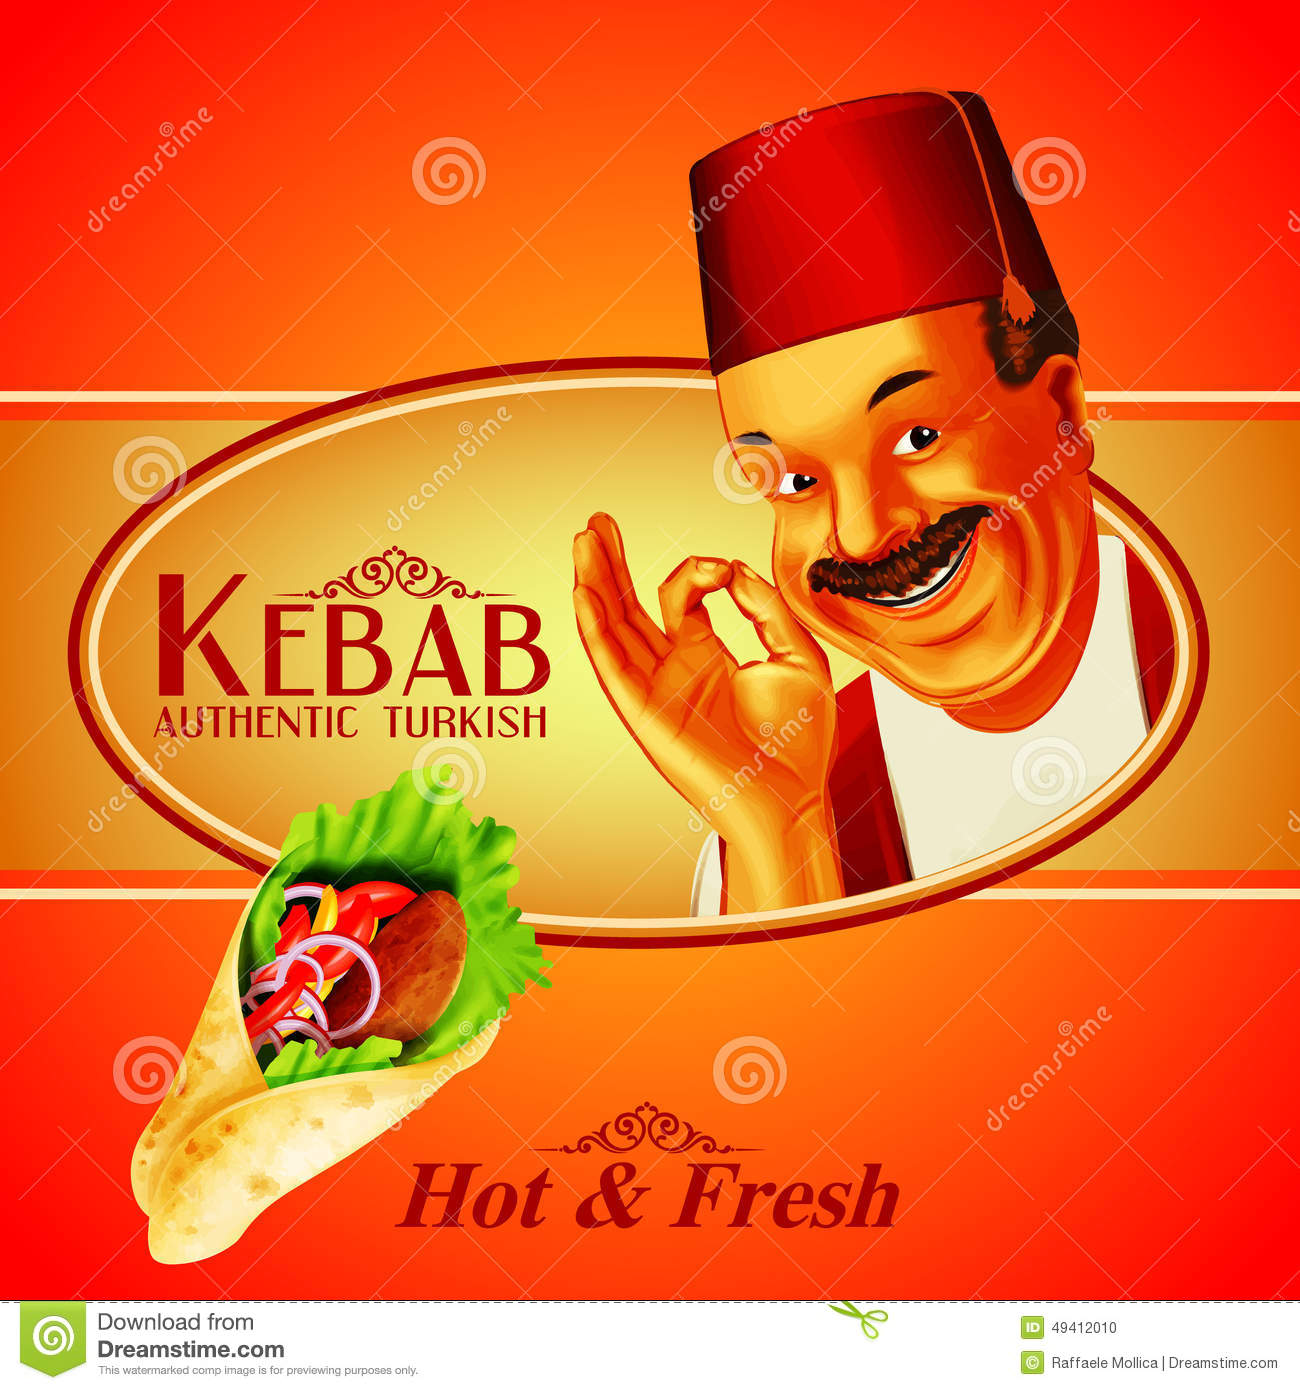 Desain Gambar Kebab